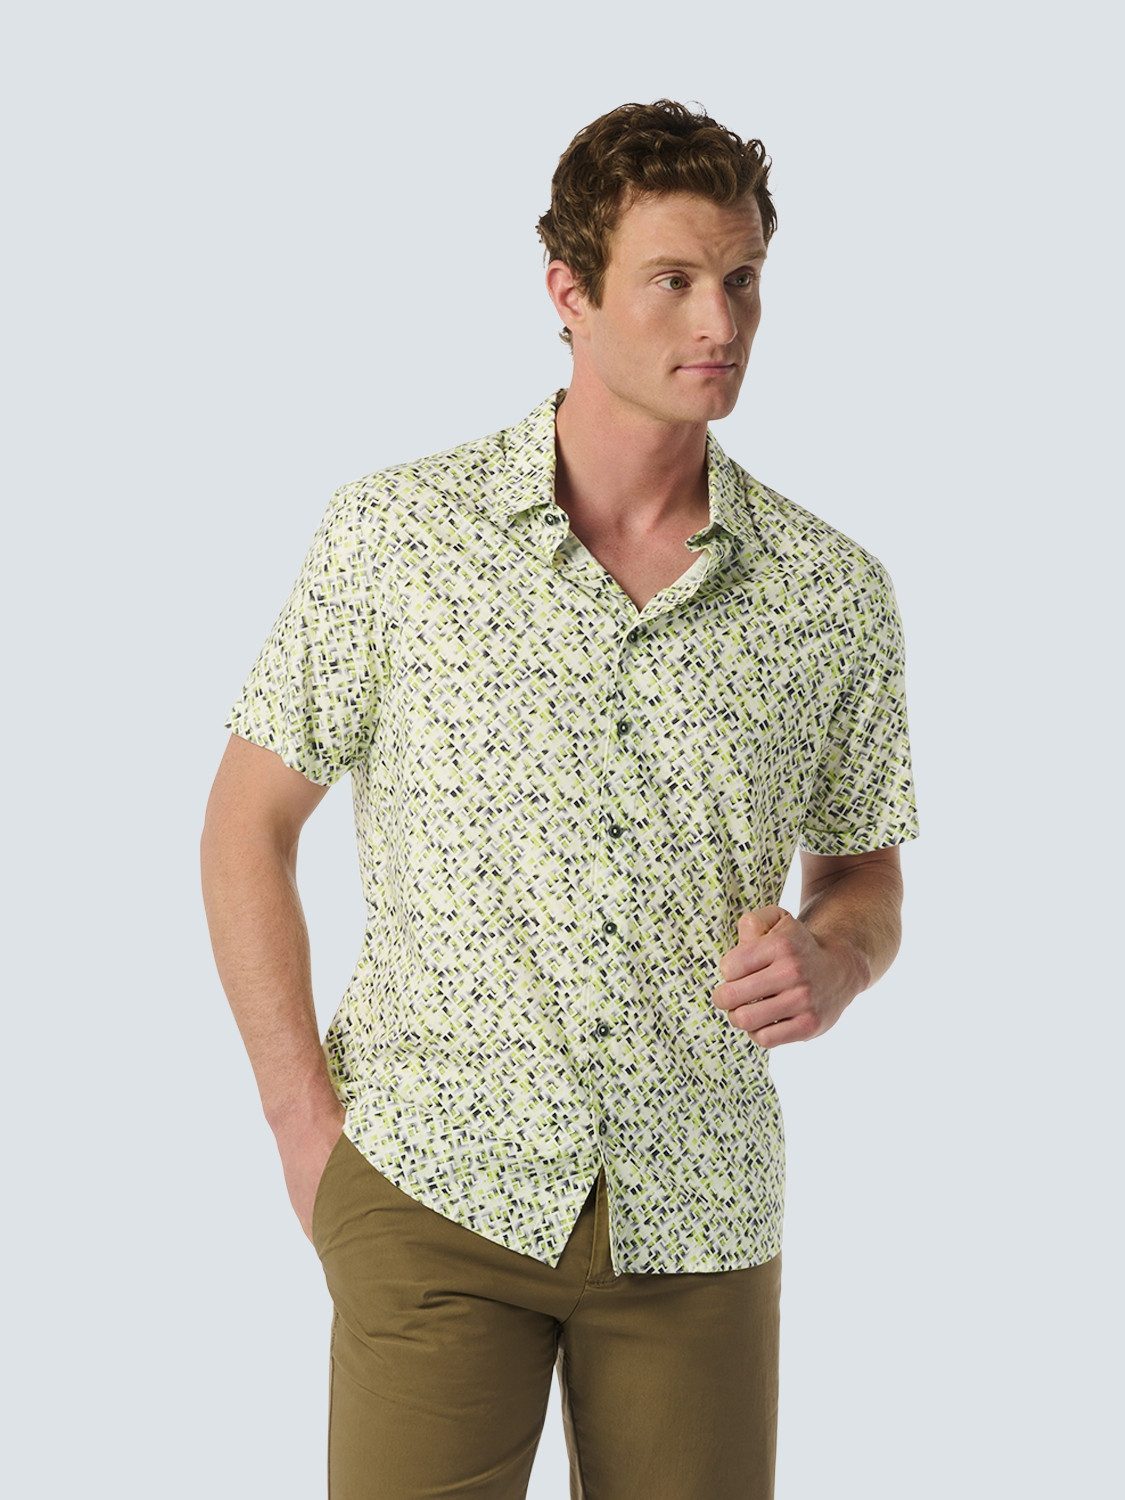 NO EXCESS Kurzarmhemd Shirt Short Sleeve Allover Printed